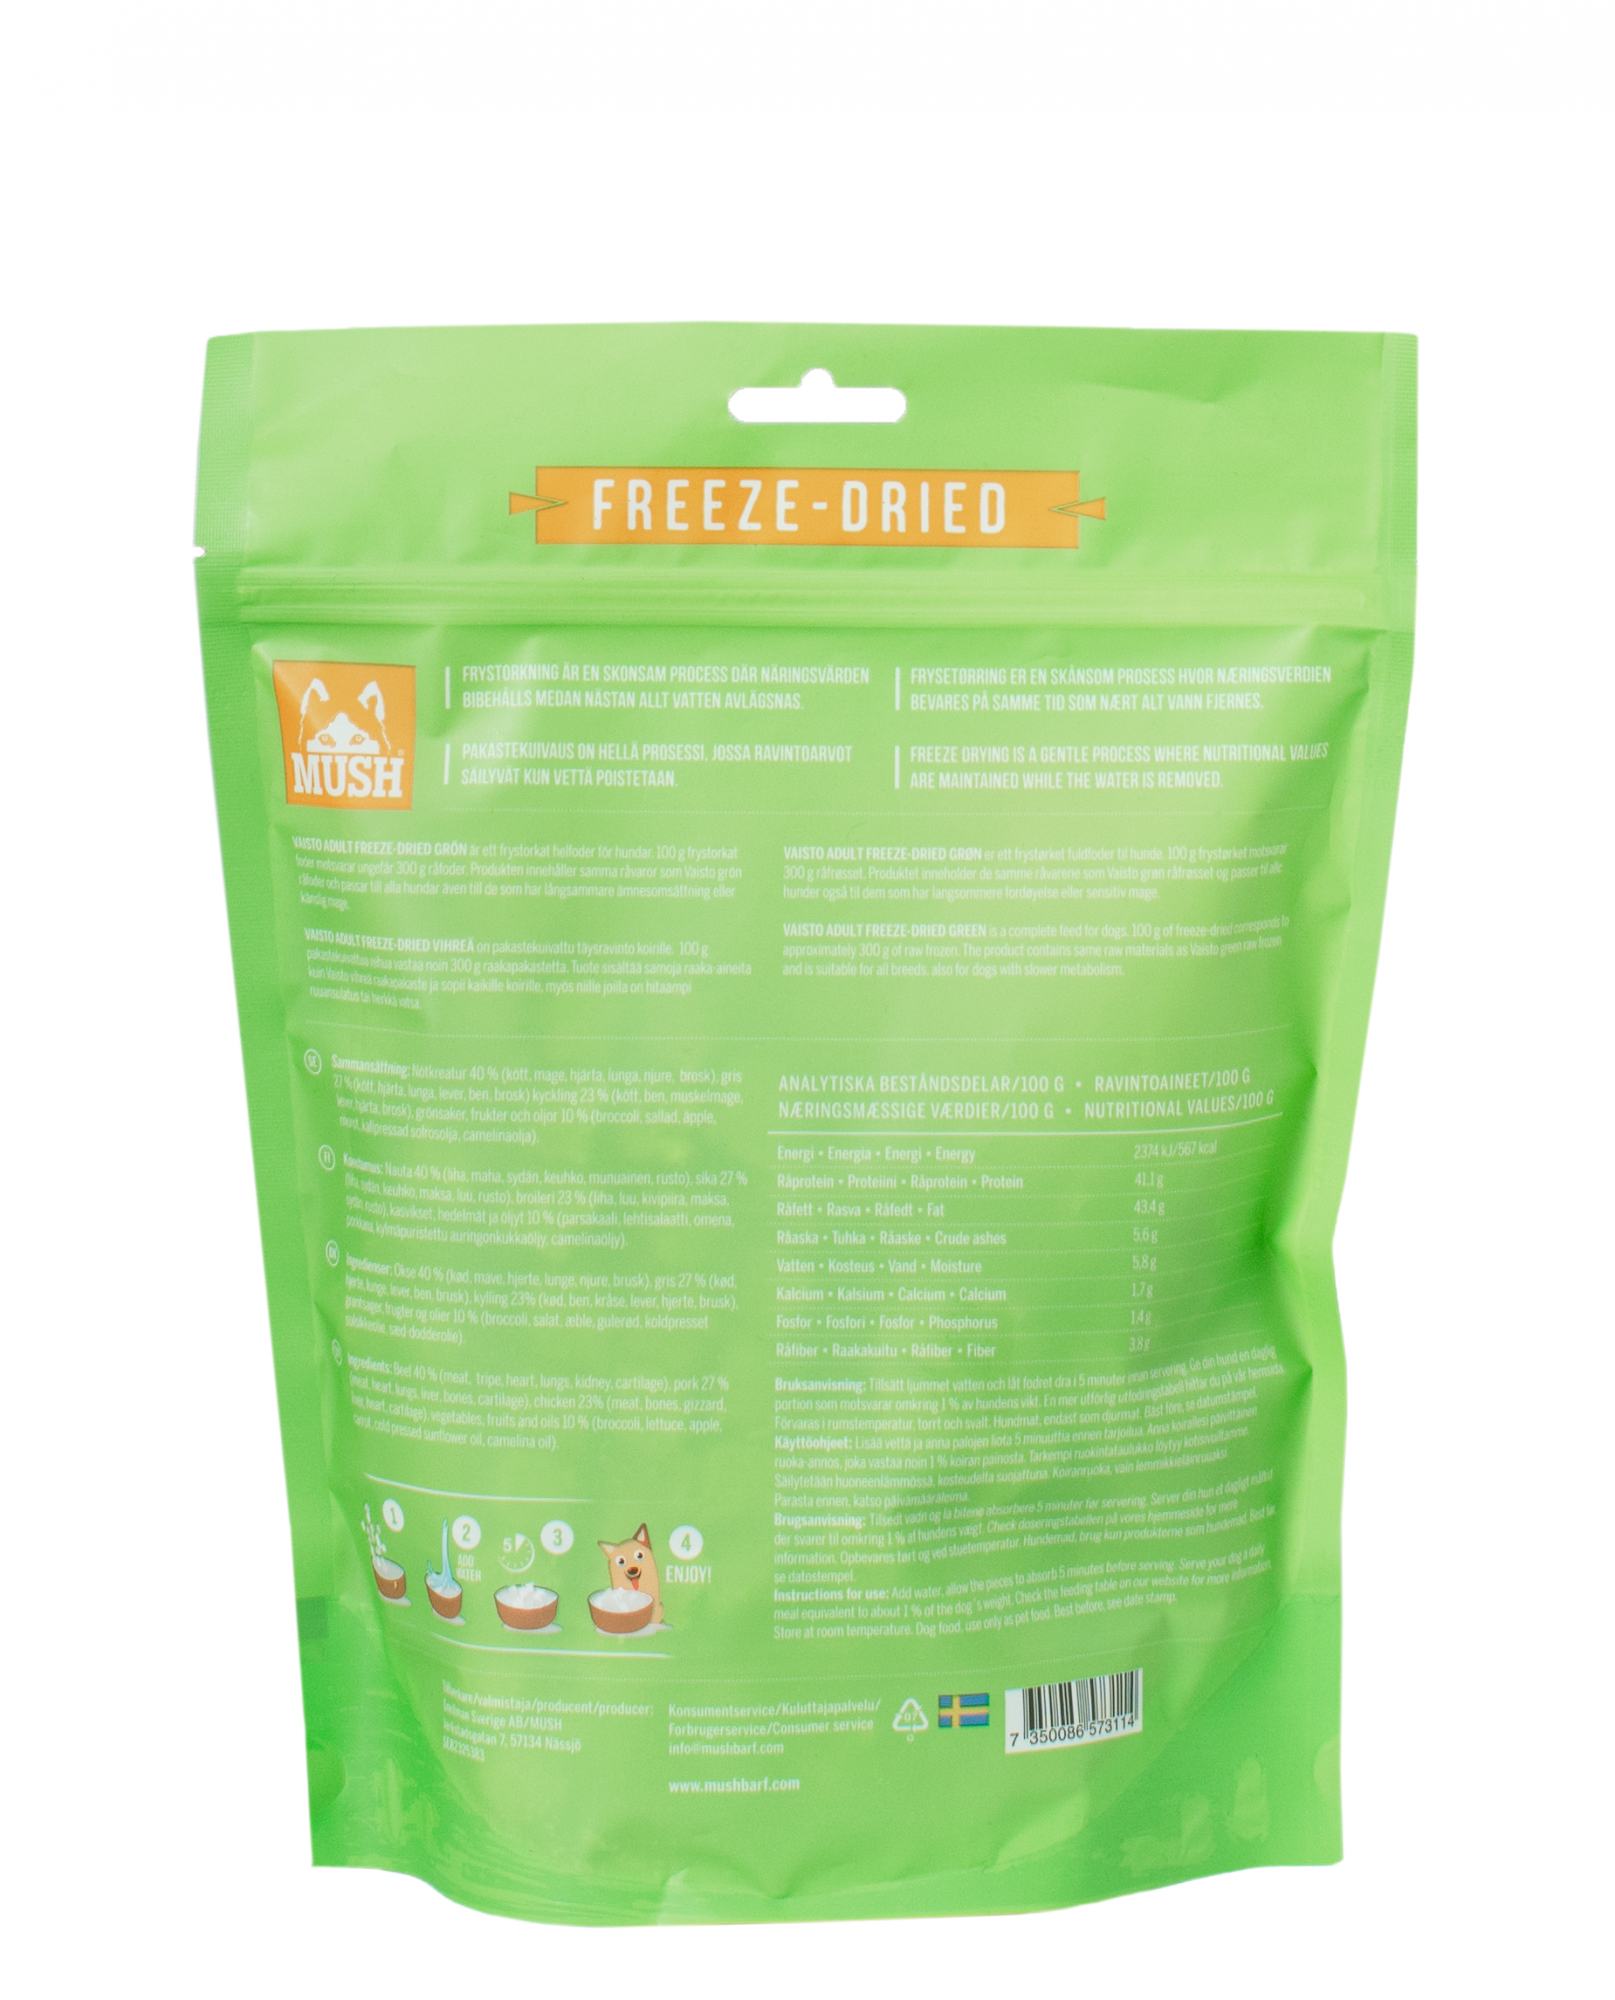 MUSH Vaisto® Grön Freeze-Dried  (nöt-gris-kyckling)